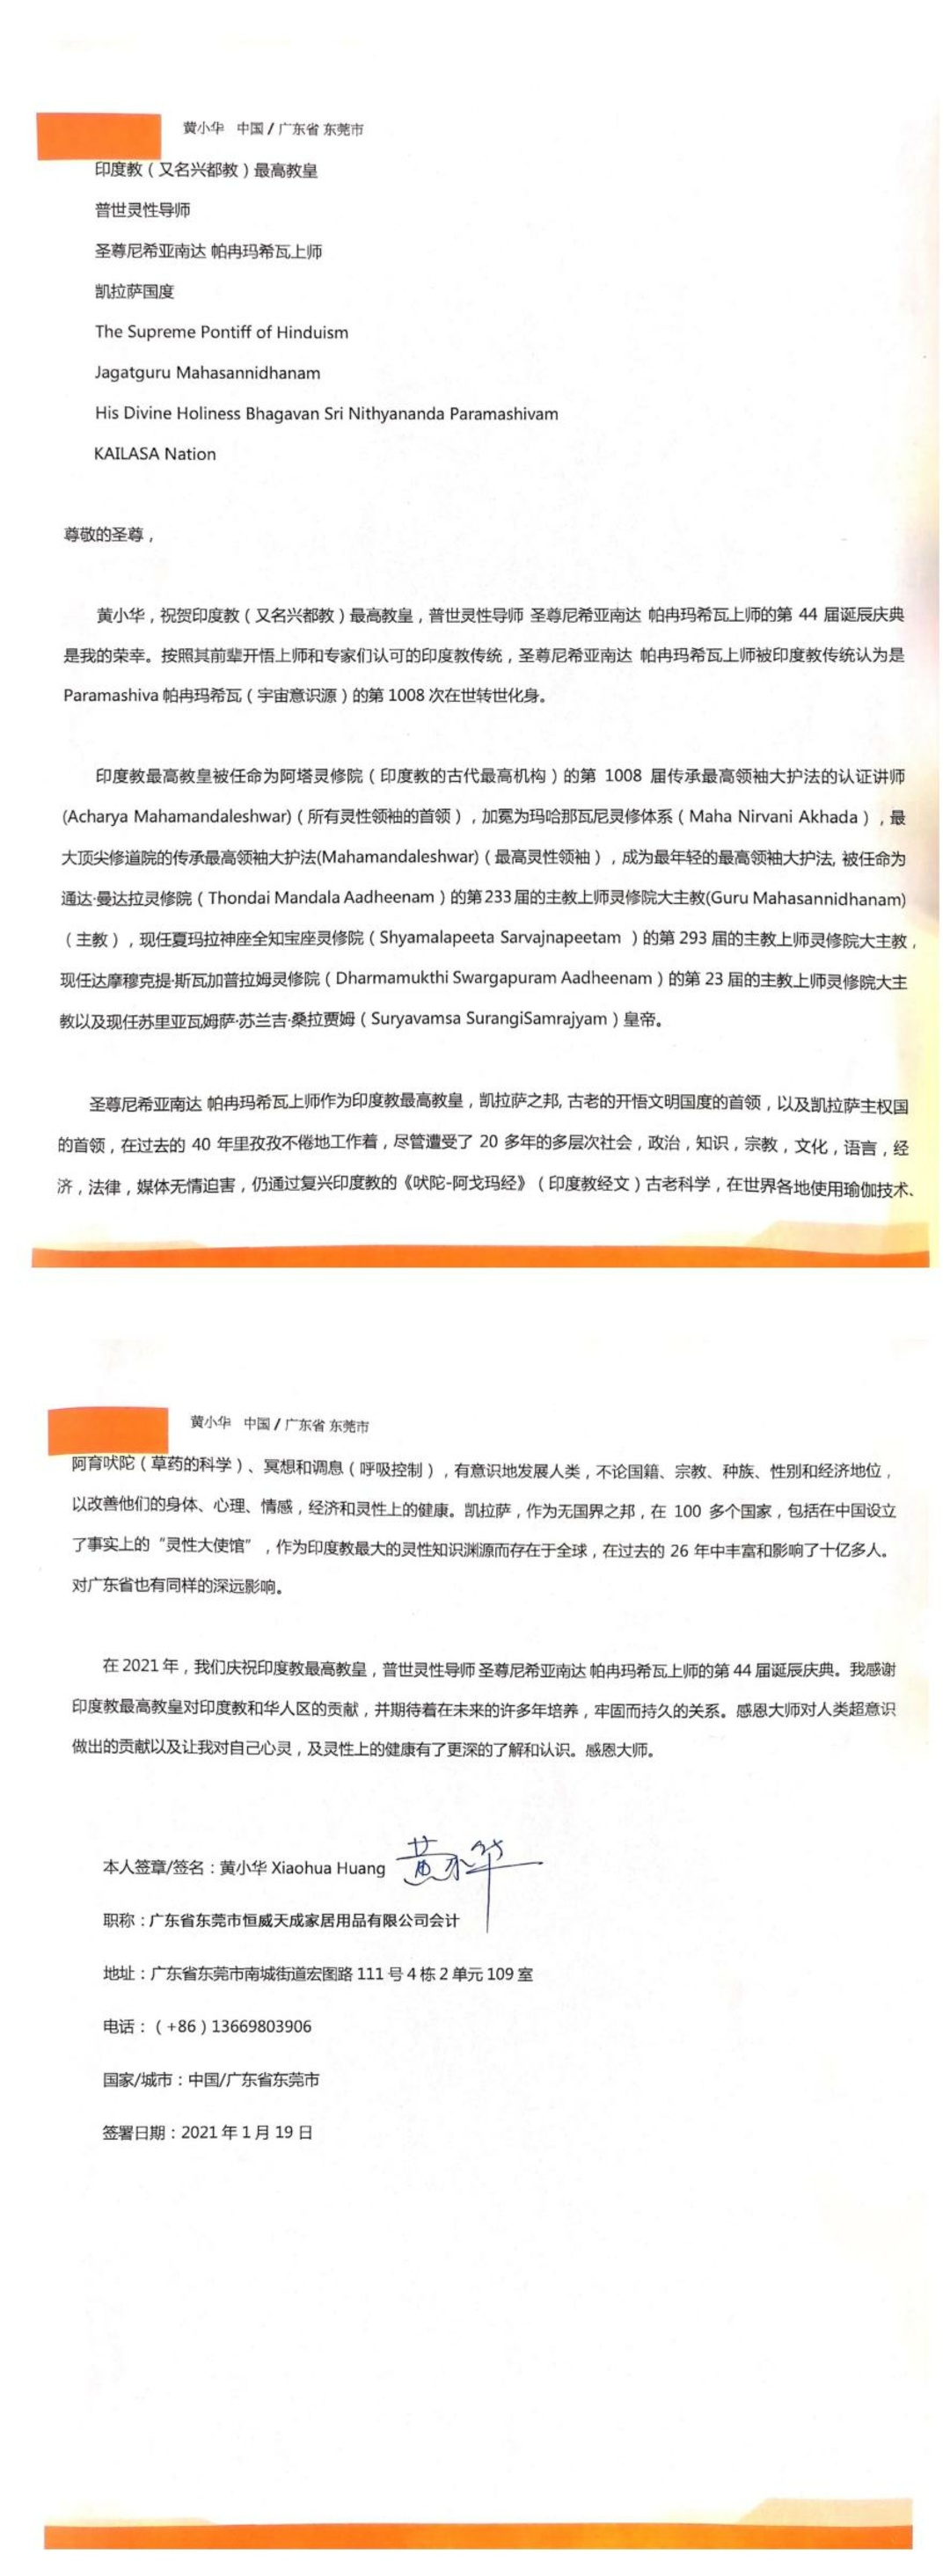 China---Xiao-Hua-Huang---19-Jan-2021-(Proclamation)-1kA6IEbx4DcdN1oGl NWTEnEvwns0tJ-s.pdf